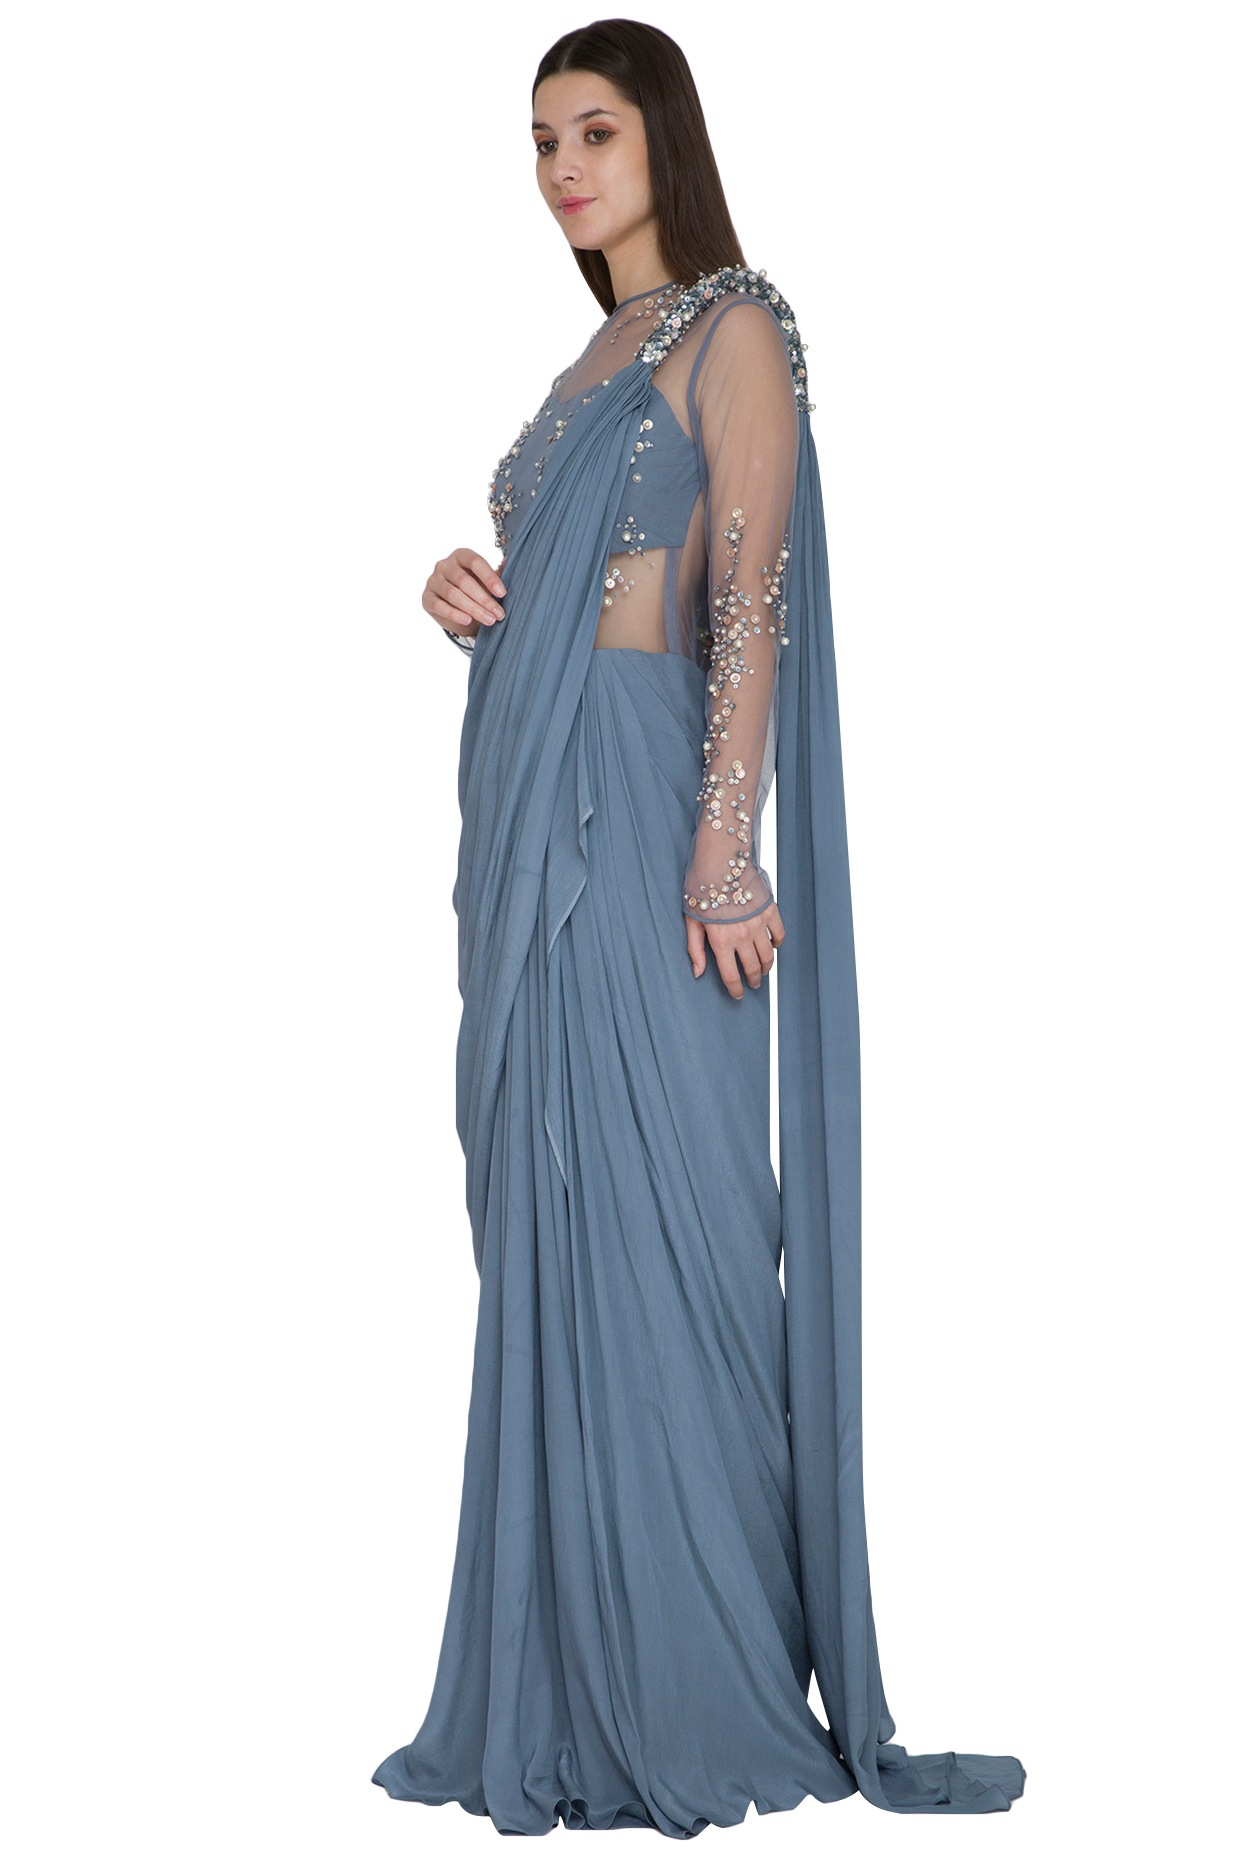 Sonaakshi Raaj's Royal Blue Saree Gown